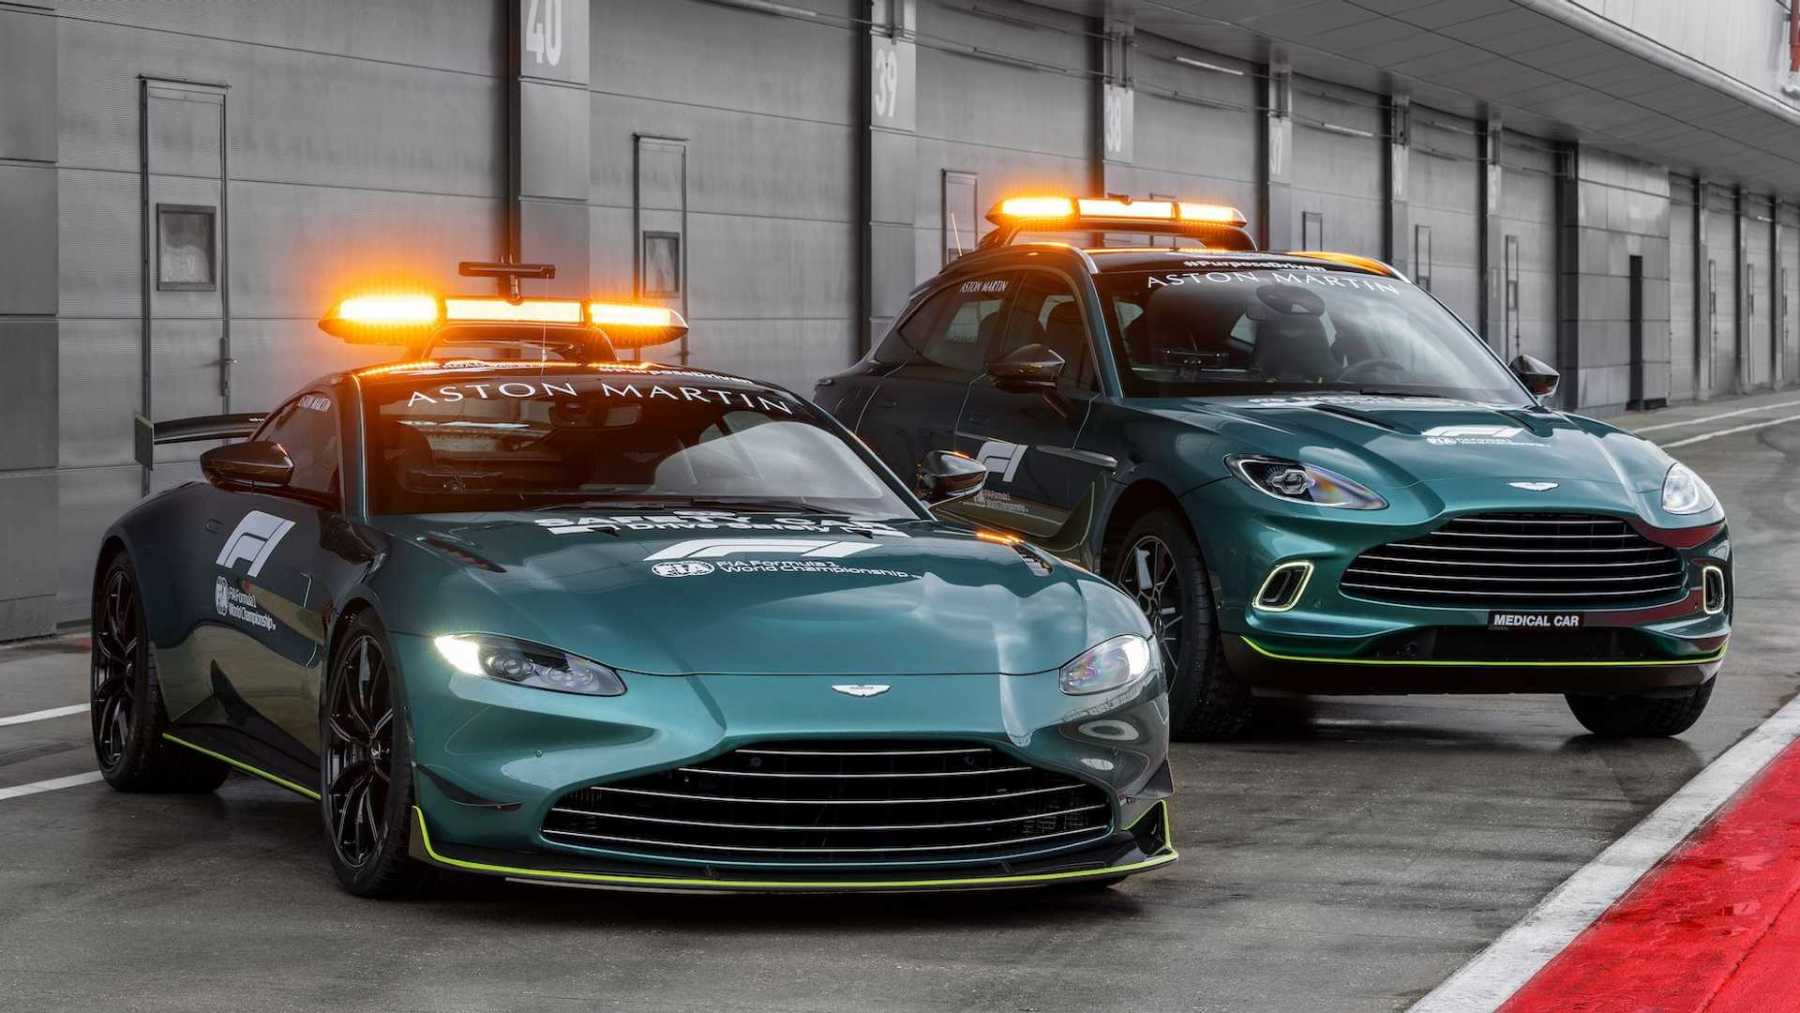 Aston Martin Vantage - Safety Car F1